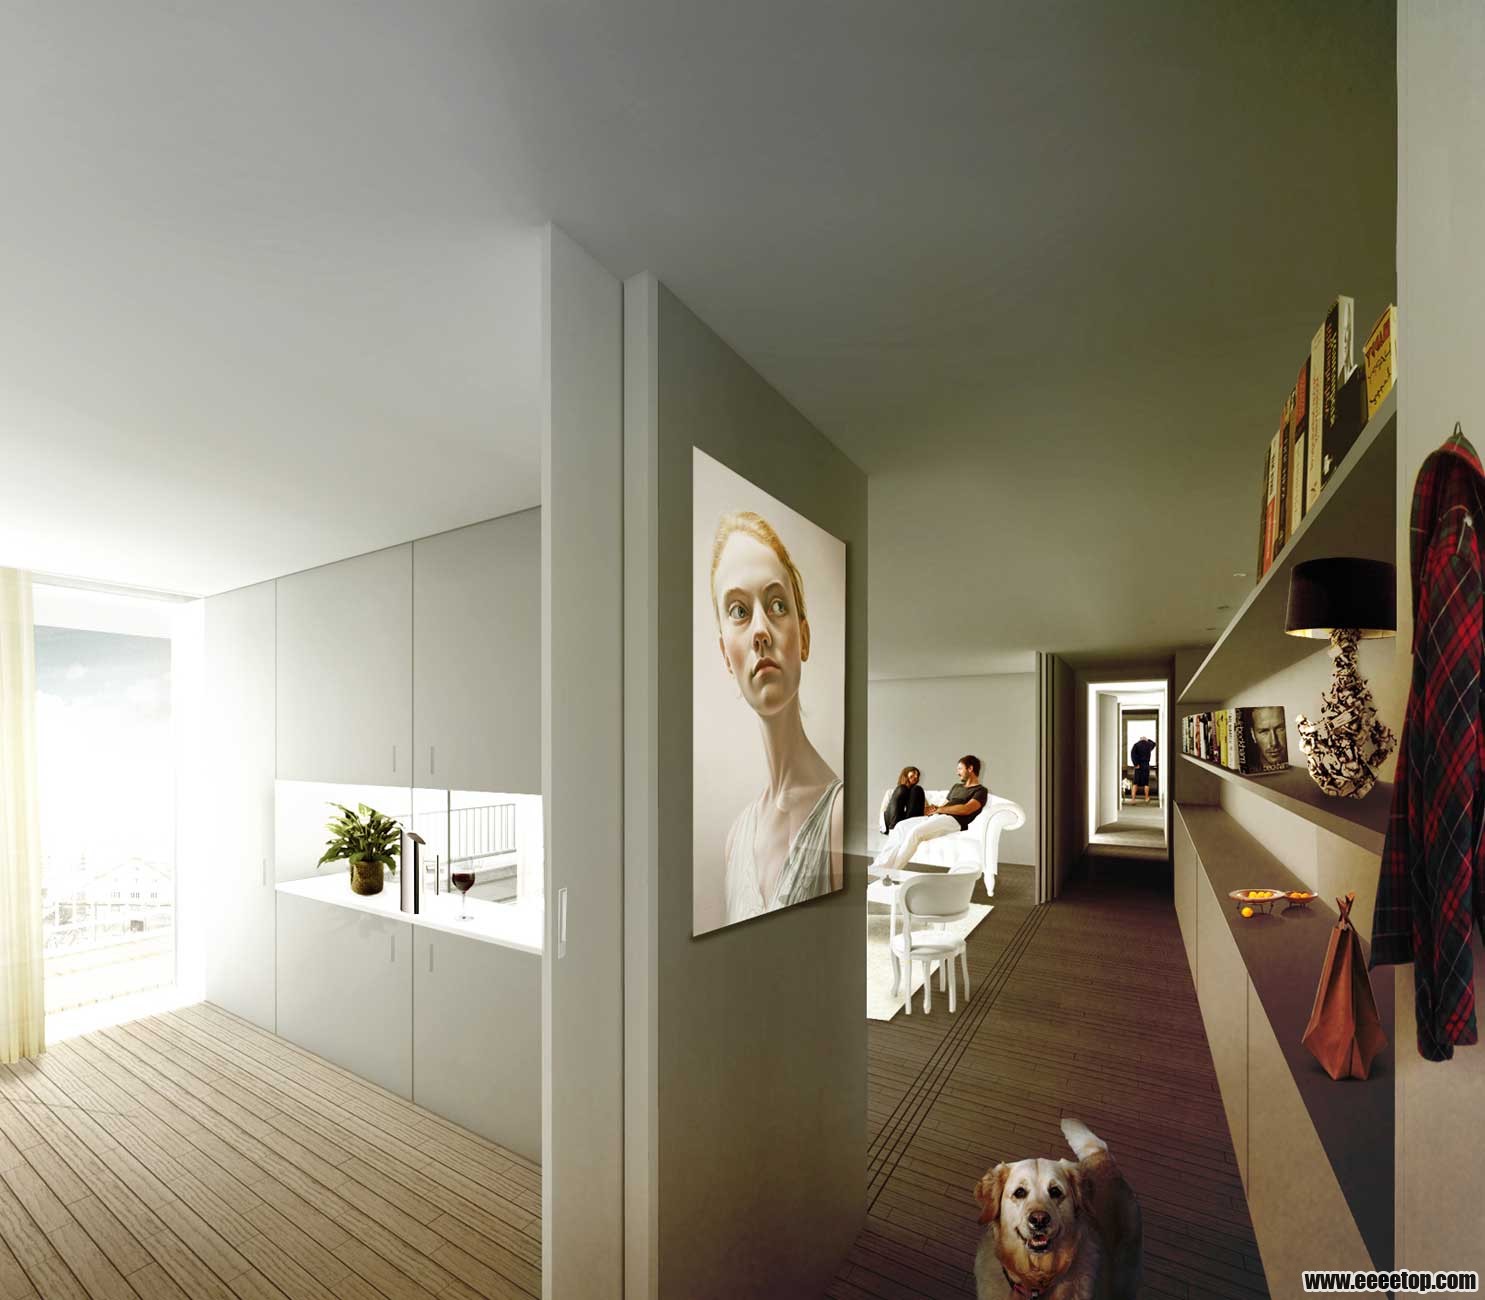 collective-housing-interior-2.jpg